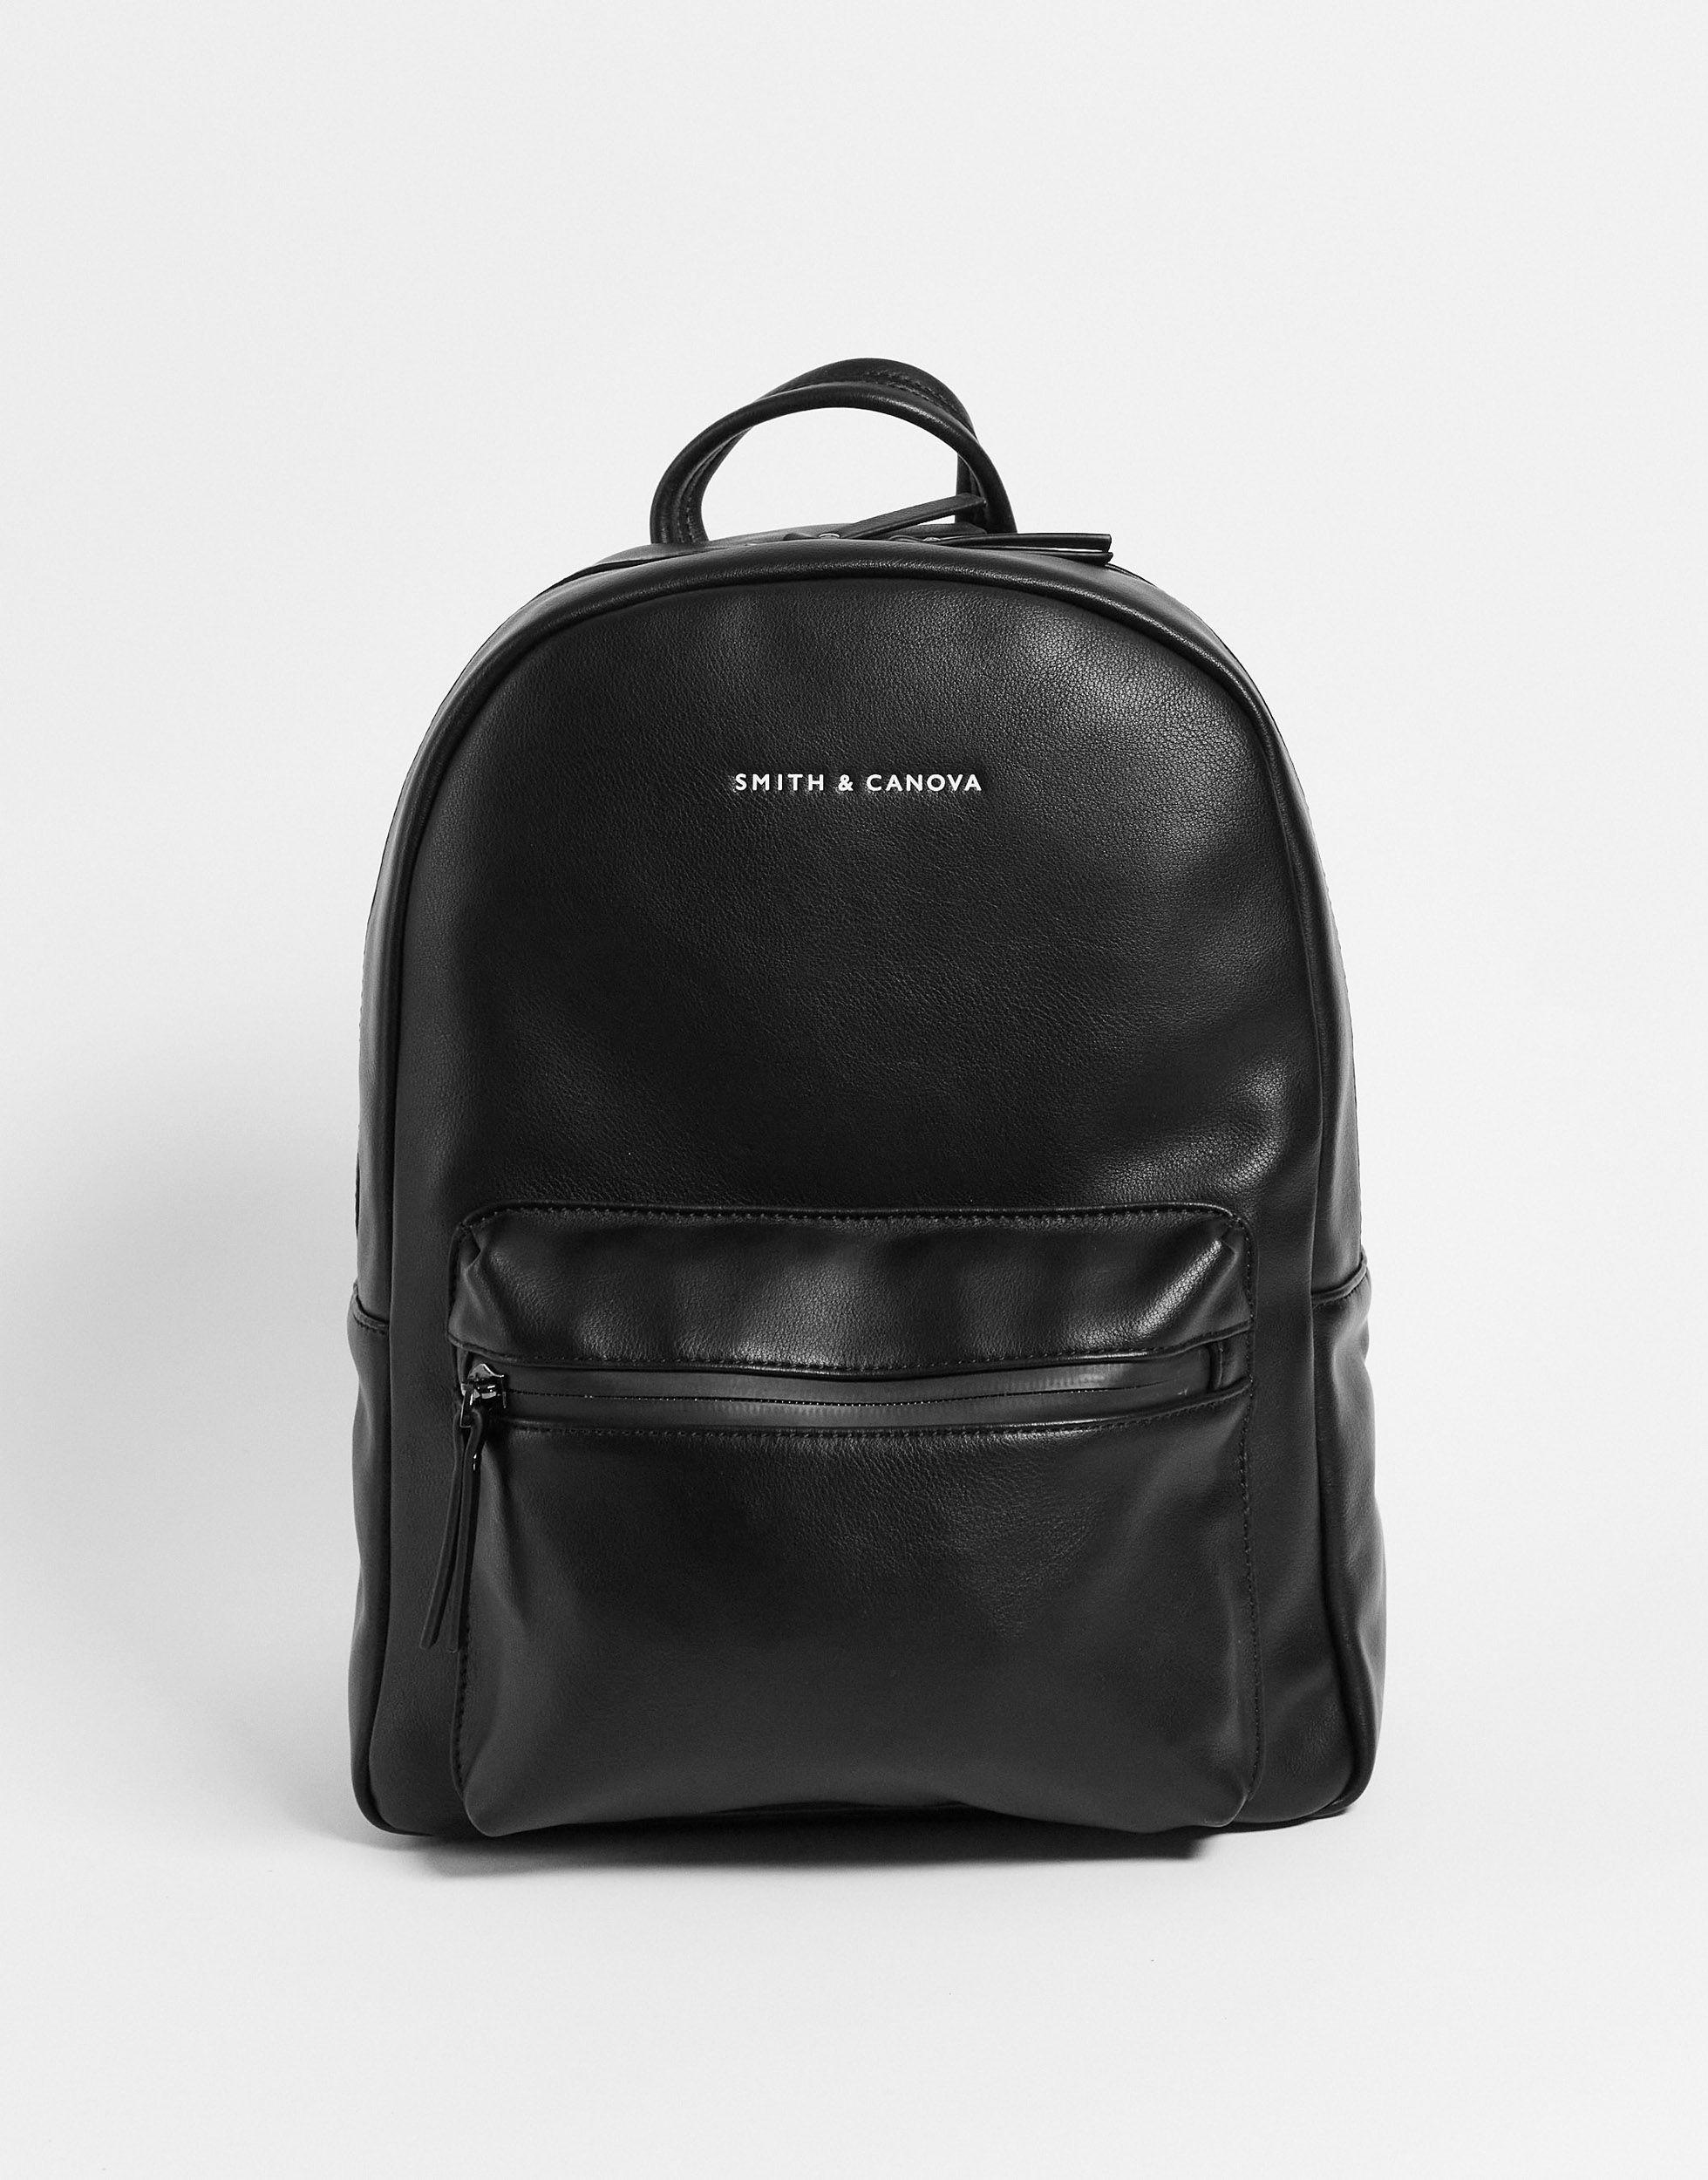 Smith & Canova Smith & Canova Leather Zip Pocket Backpack in Black for ...